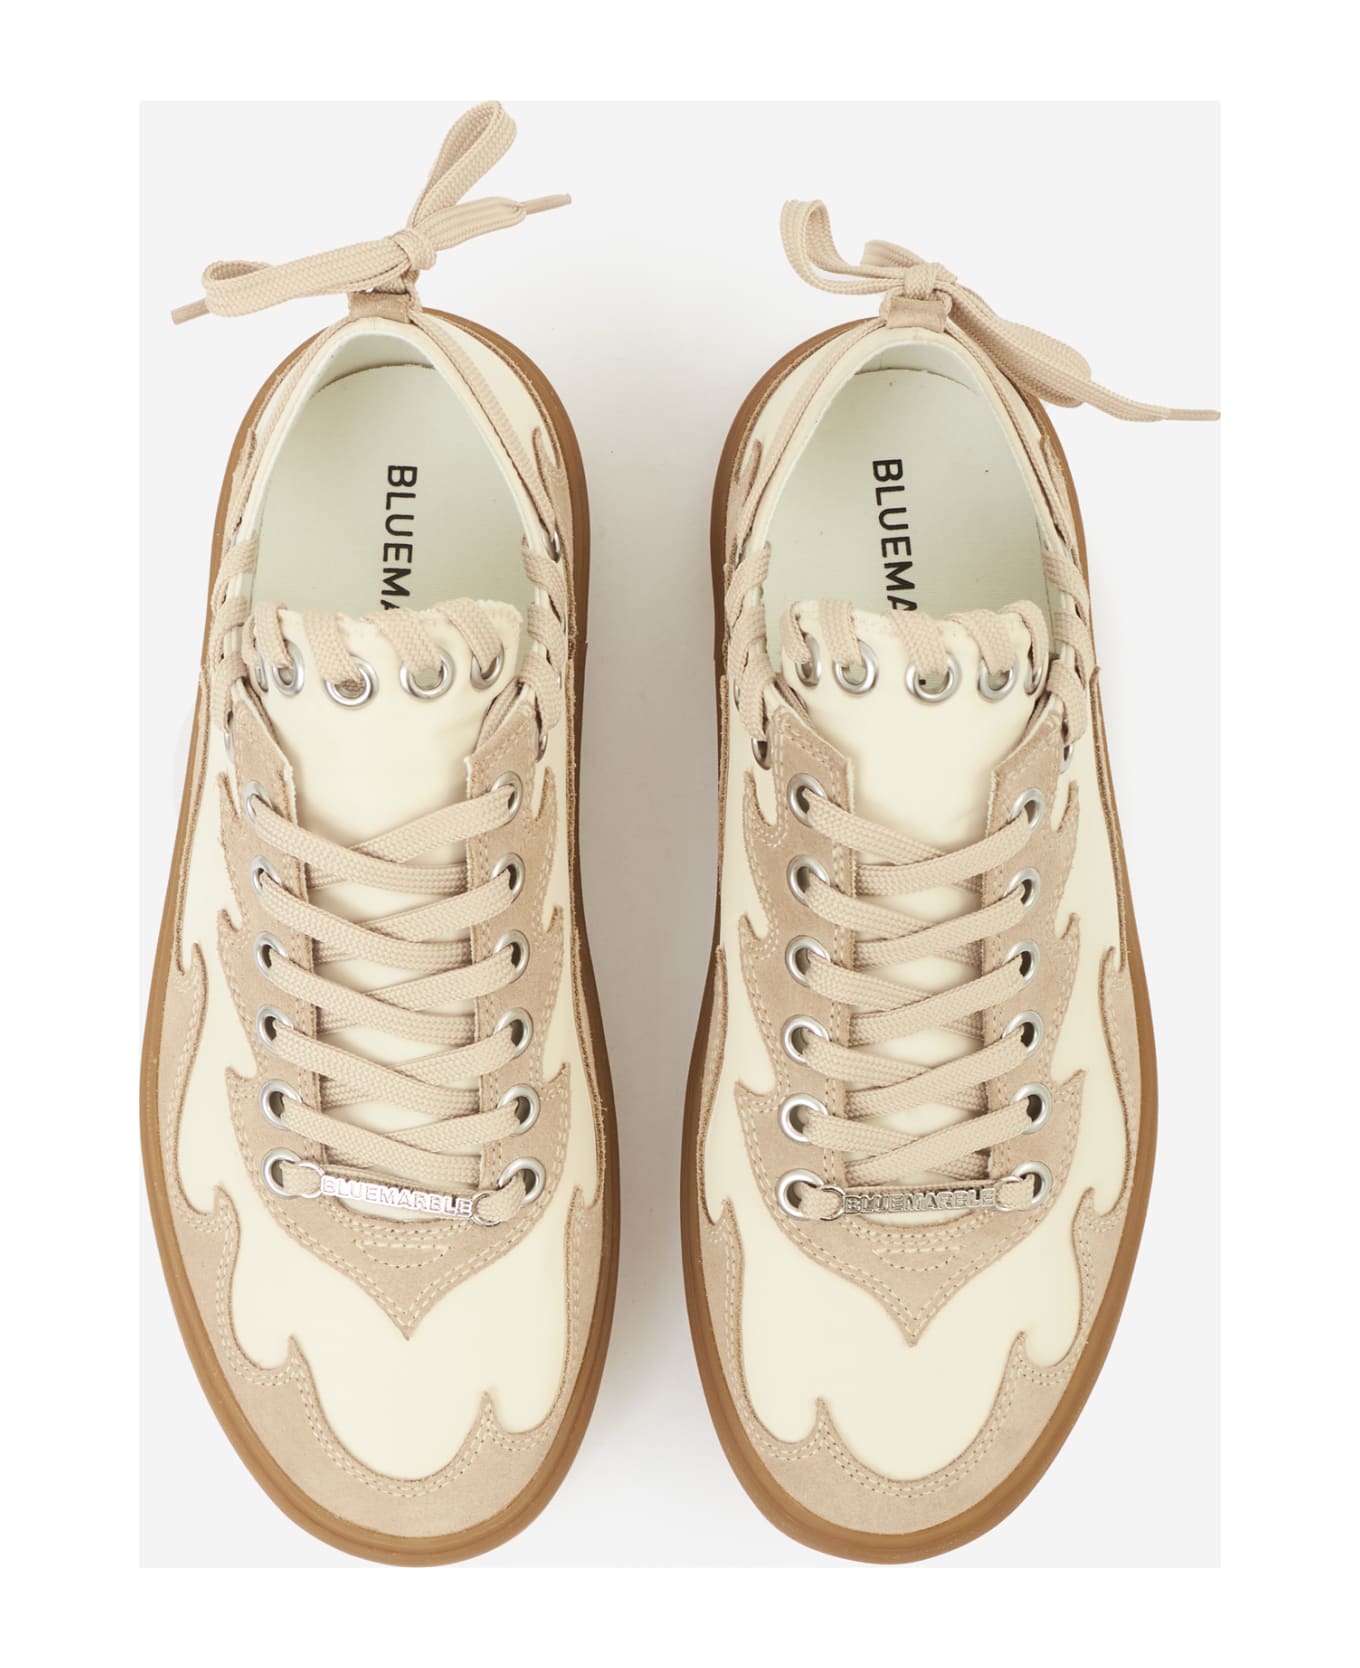 Bluemarble Wavy Applique Sneakers - beige スニーカー